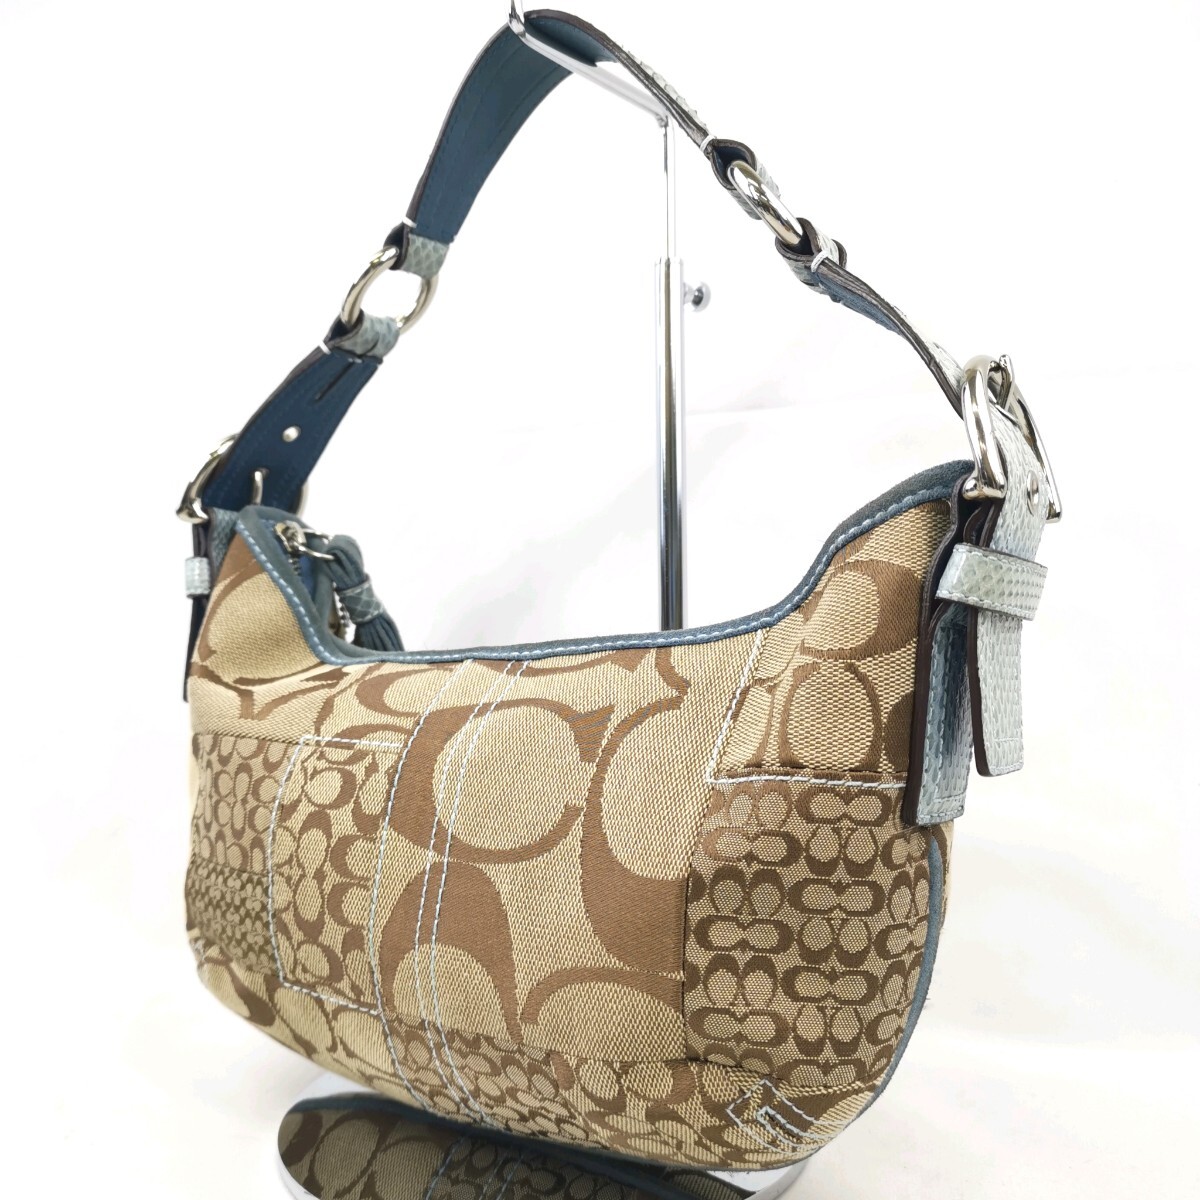 I $[ commodity rank :B] Coach COACH signature total pattern one part leather handbag handbag tote bag woman bag light blue × beige group easiness of use *